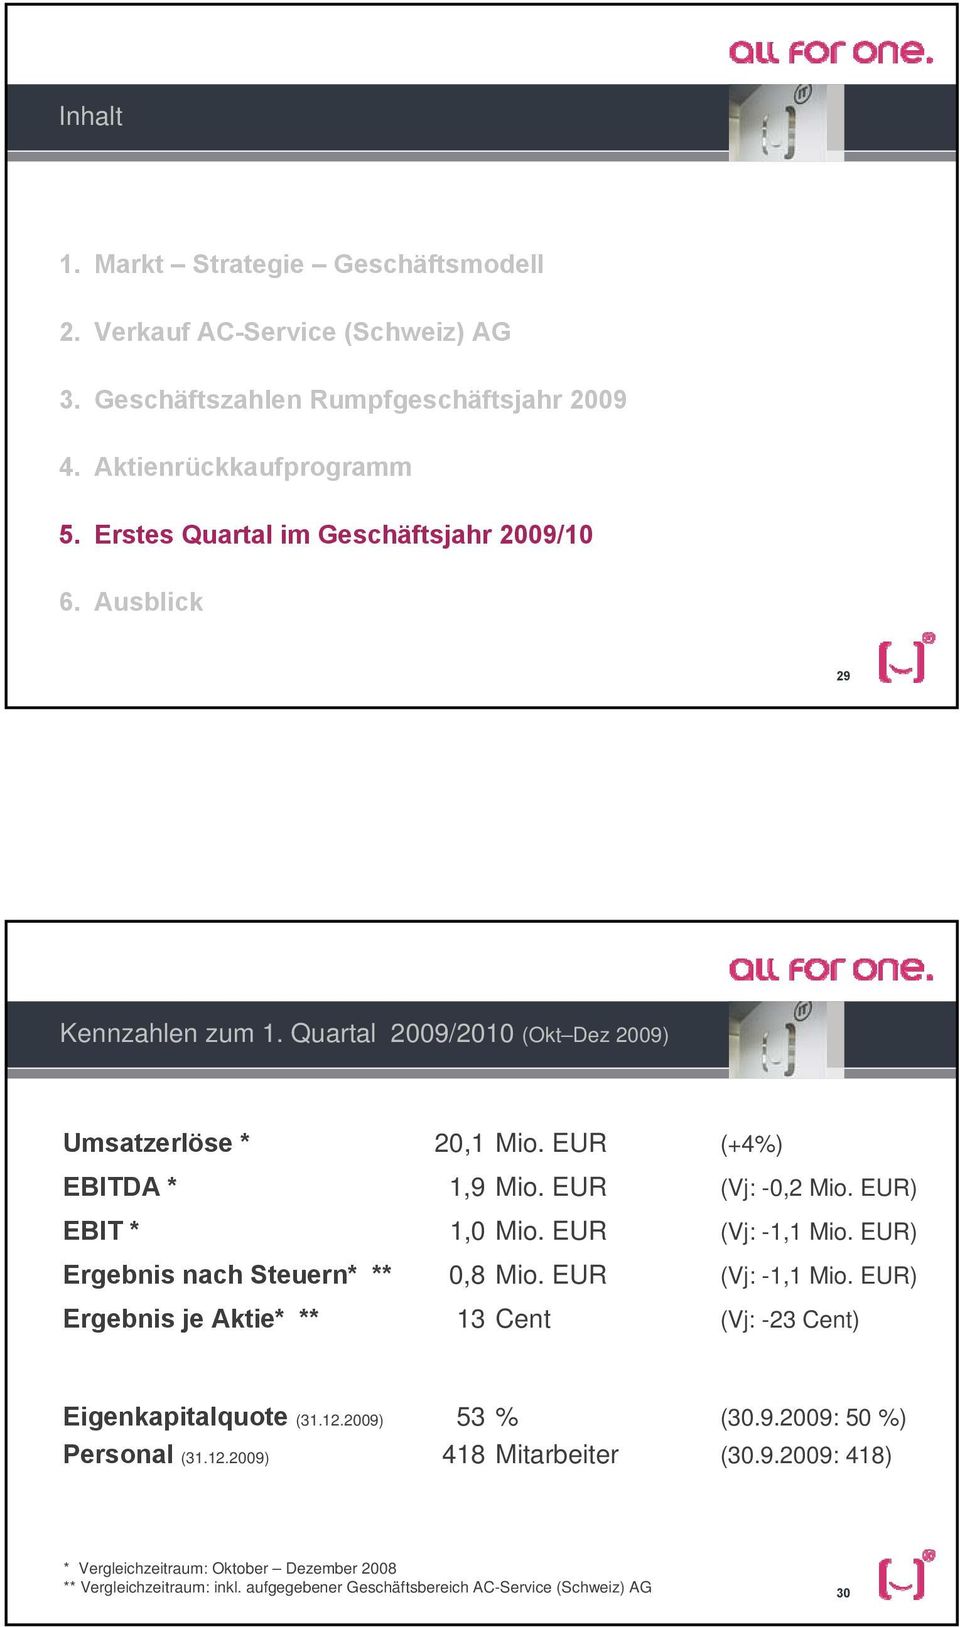 EUR) EBIT * 1,0 Mio. EUR (Vj: -1,1 Mio. EUR) Ergebnis nach Steuern* ** 0,8 Mio. EUR (Vj: -1,1 Mio. EUR) Ergebnis je Aktie* ** 13 Cent (Vj: -23 Cent) Eigenkapitalquote (31.12.